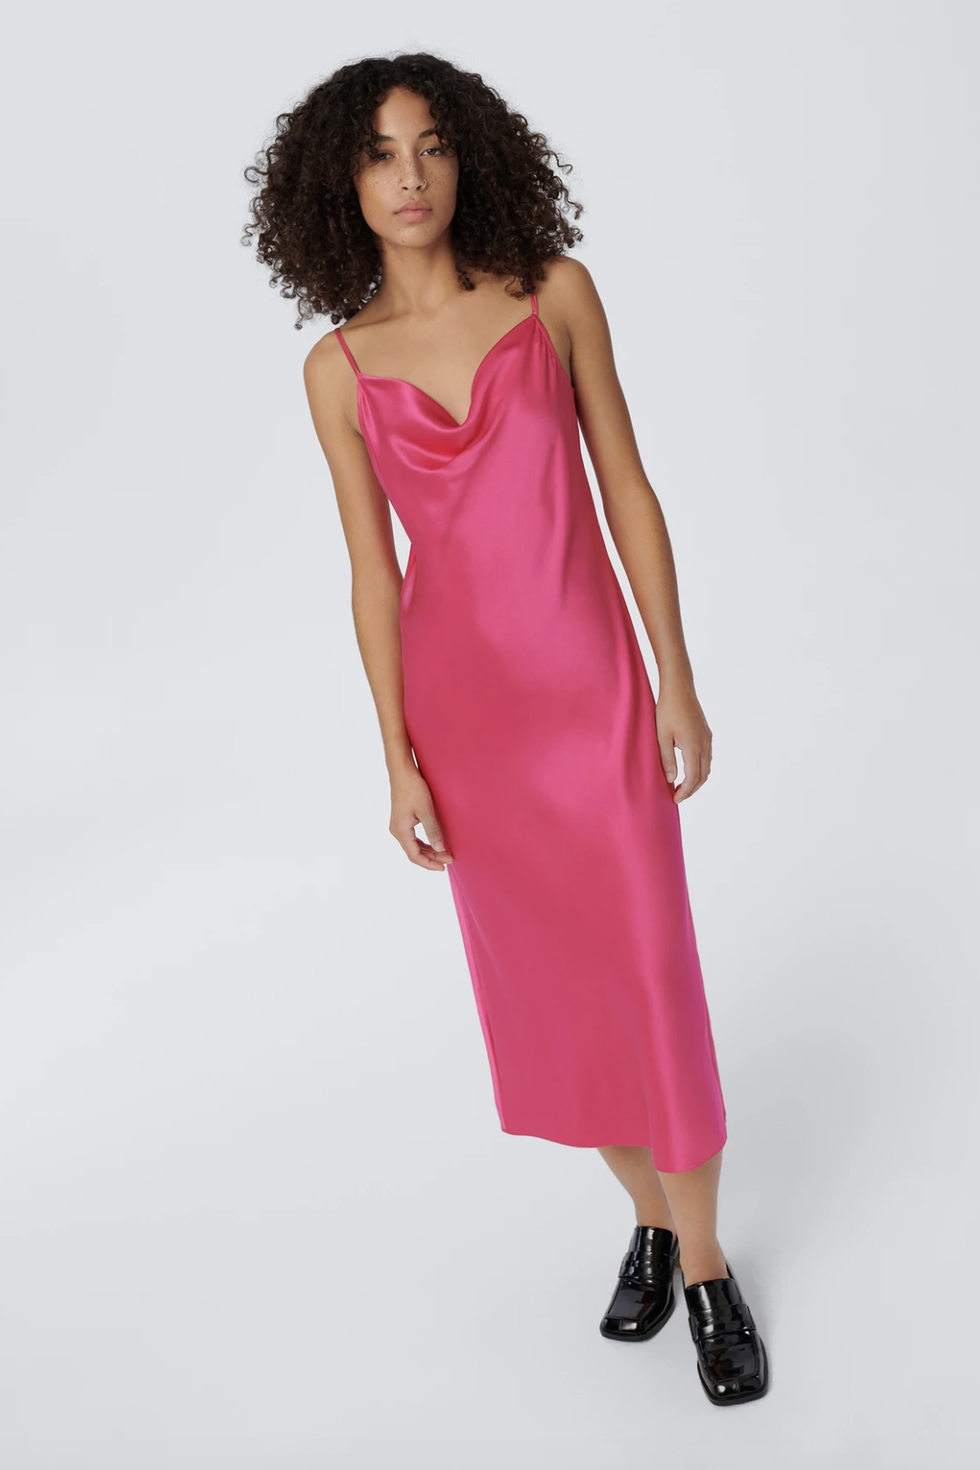 A $60 Pink Zara Satin Slip Dress Is Taking Over Tiktok